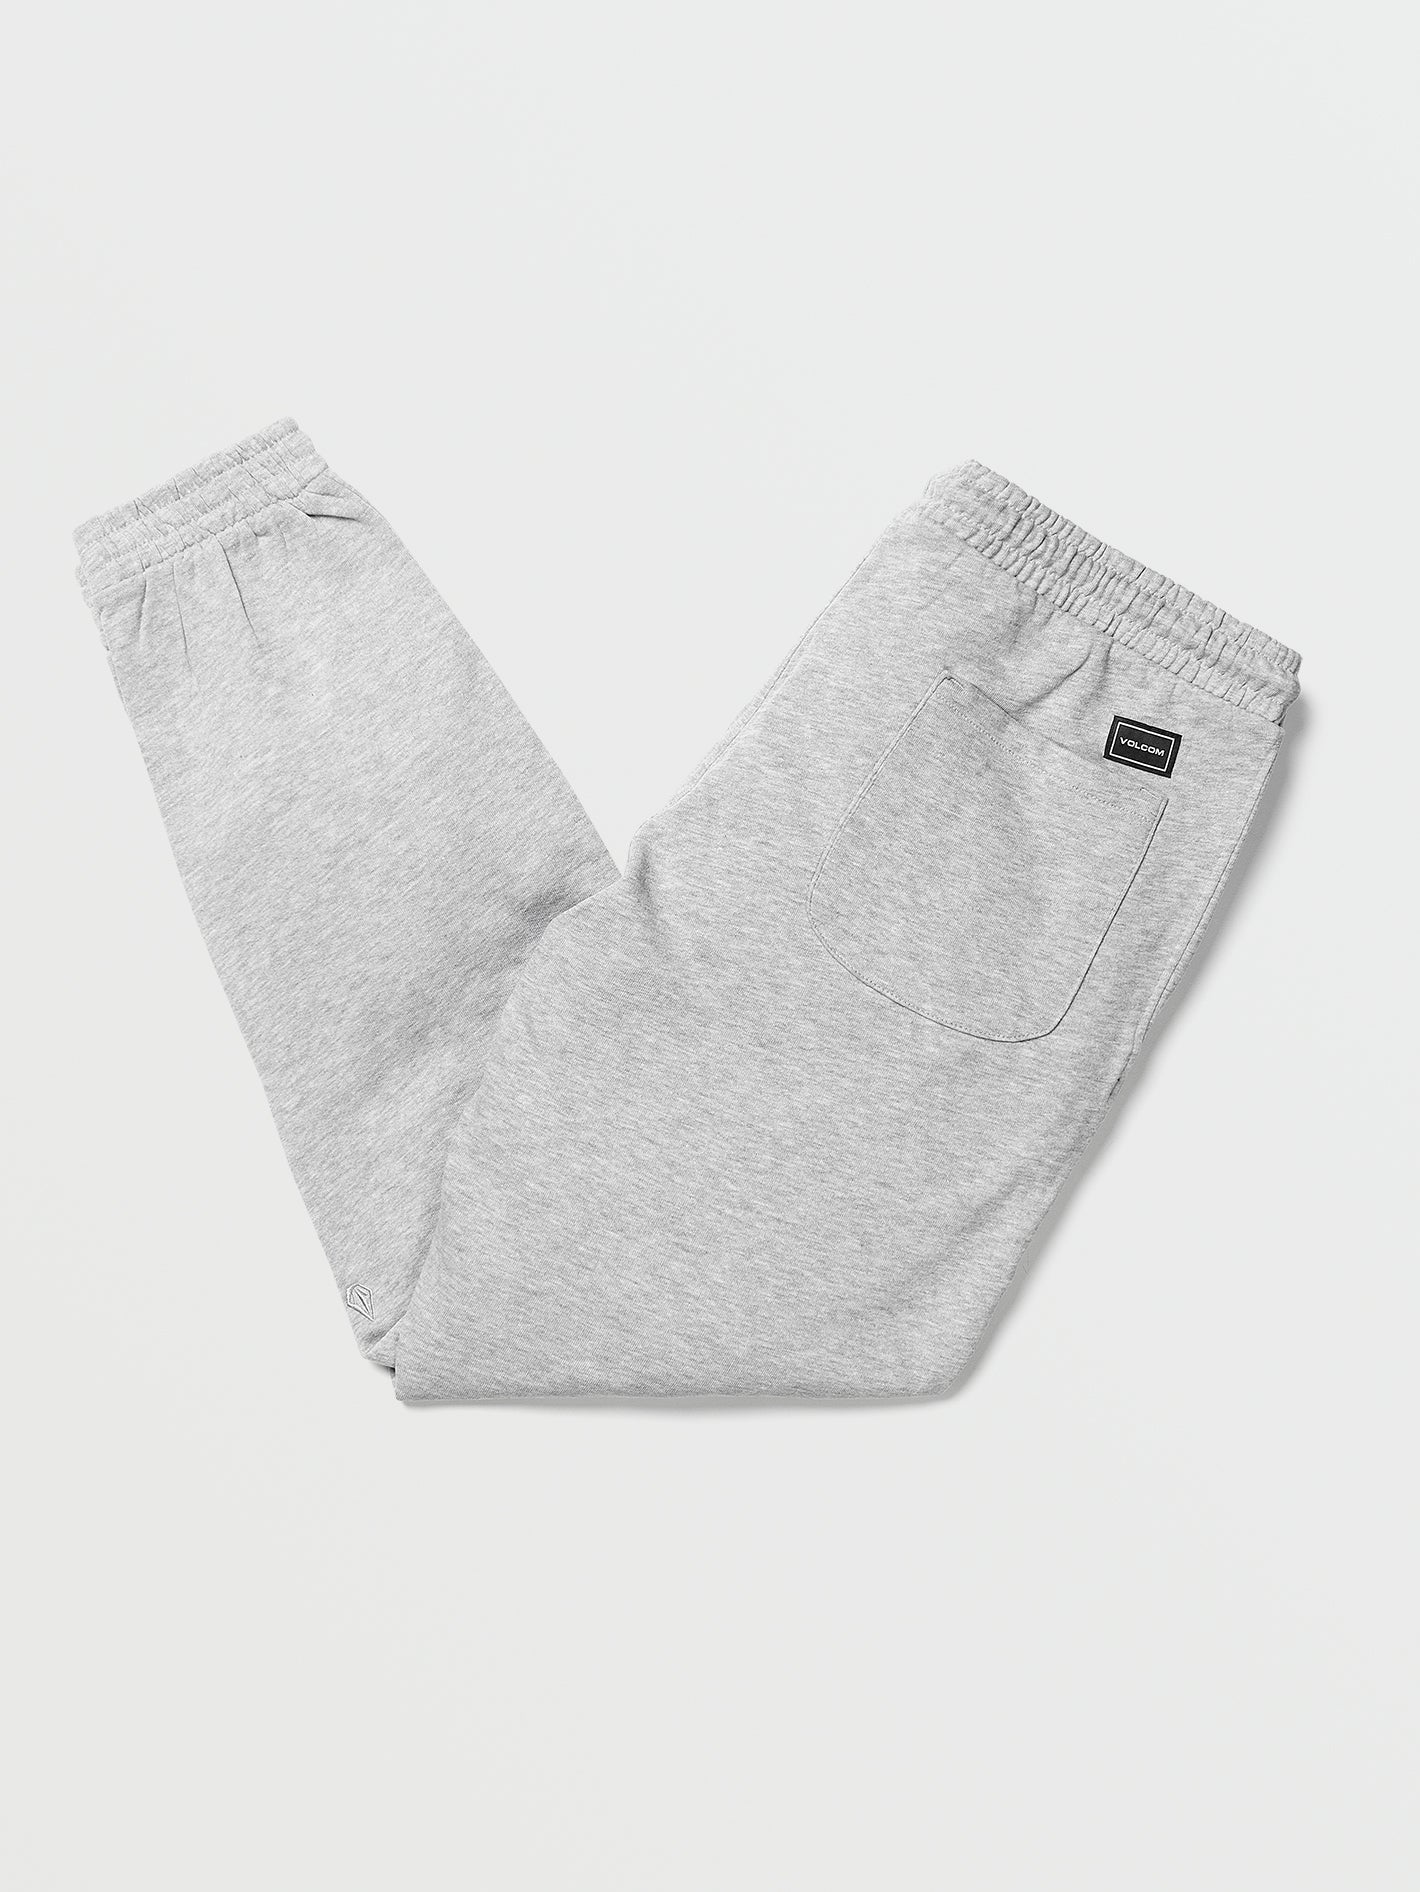 Grey Elastic Waist Pant - Lowes Menswear